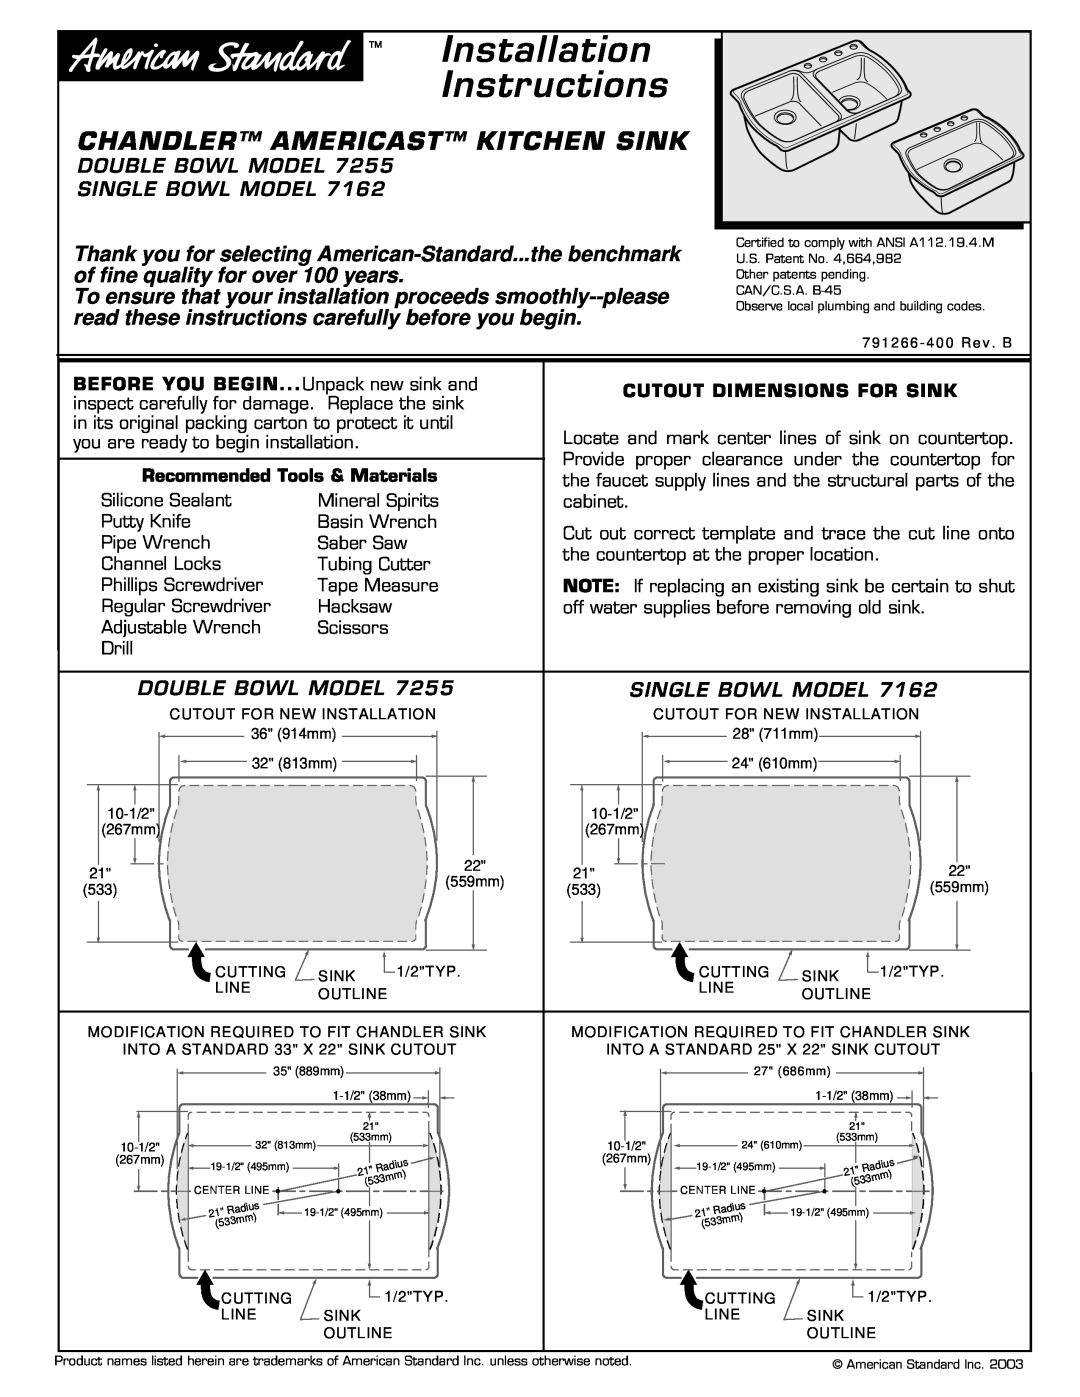 American Standard 7255, 7162 installation instructions Installation Instructions, Chandler Americast Kitchen Sink 